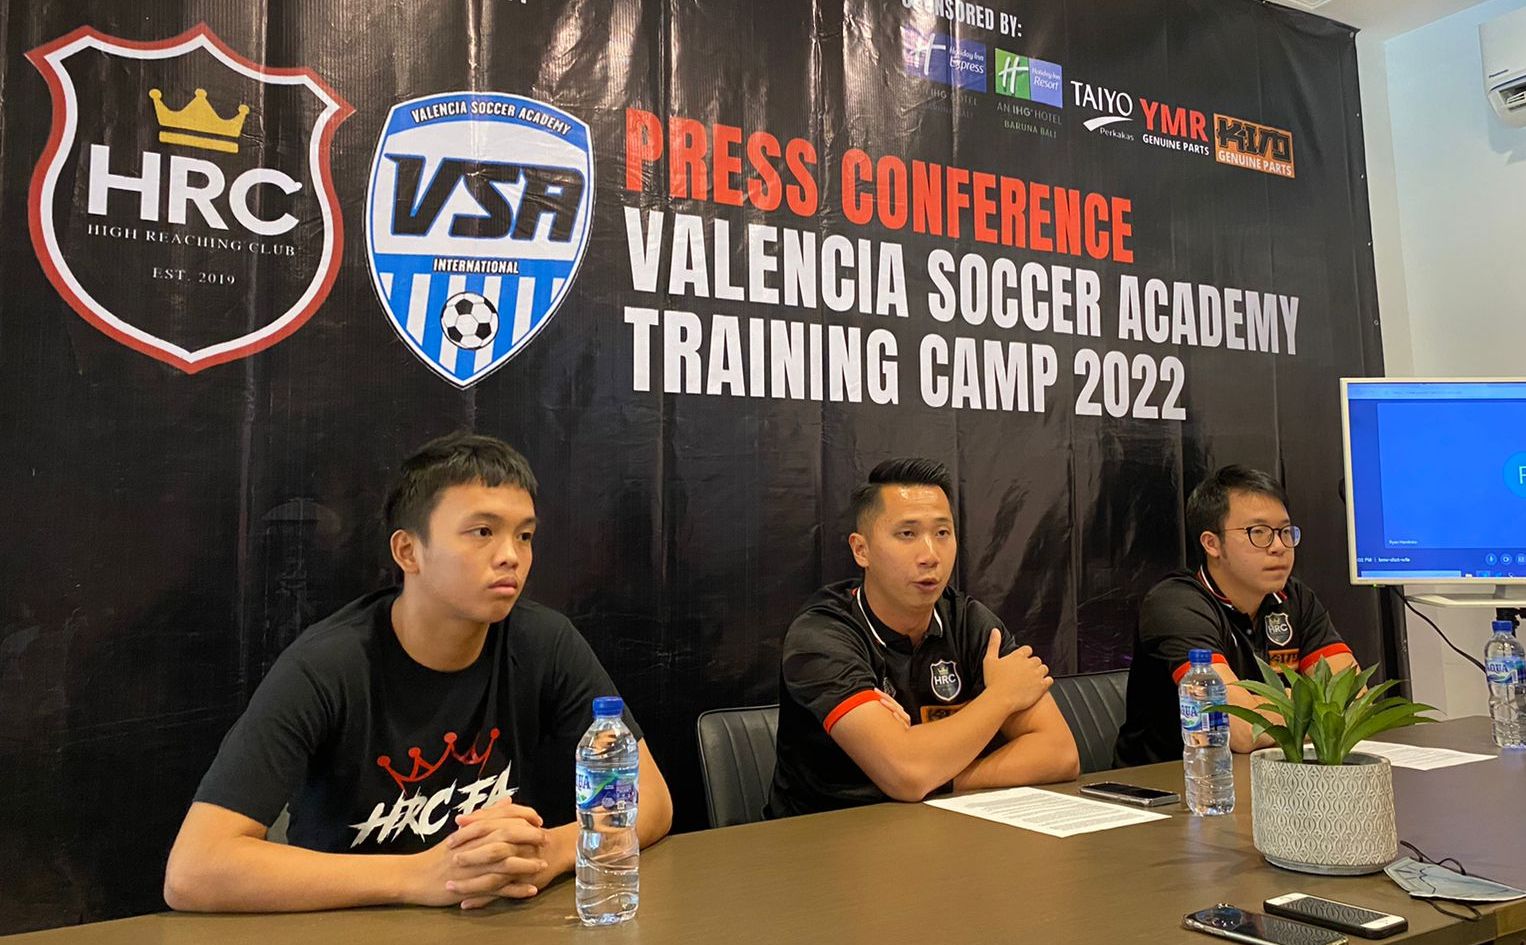 Press Cobference Valencia Soccer Academy Training Camp 2022 di Hook Coffee Space, Jakarta, Rabu (8/6/2022).